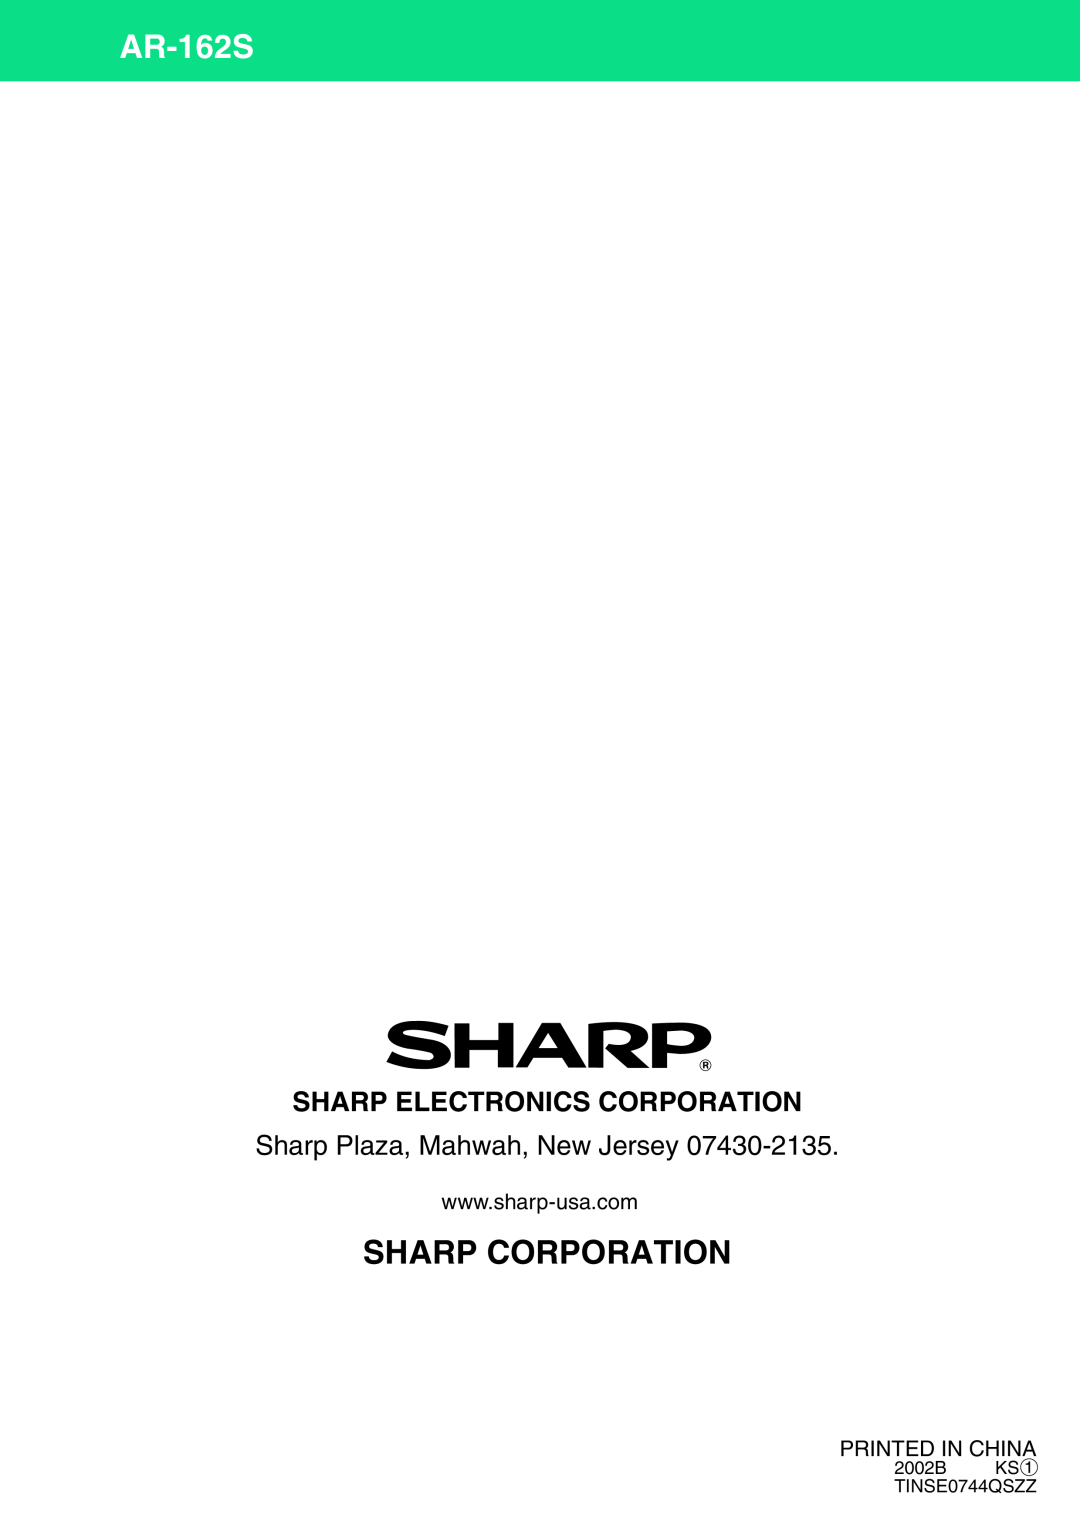 Sharp AR-162S Printed In China, Sharp Corporation, Sharp Electronics Corporation, Sharp Plaza, Mahwah, New Jersey 